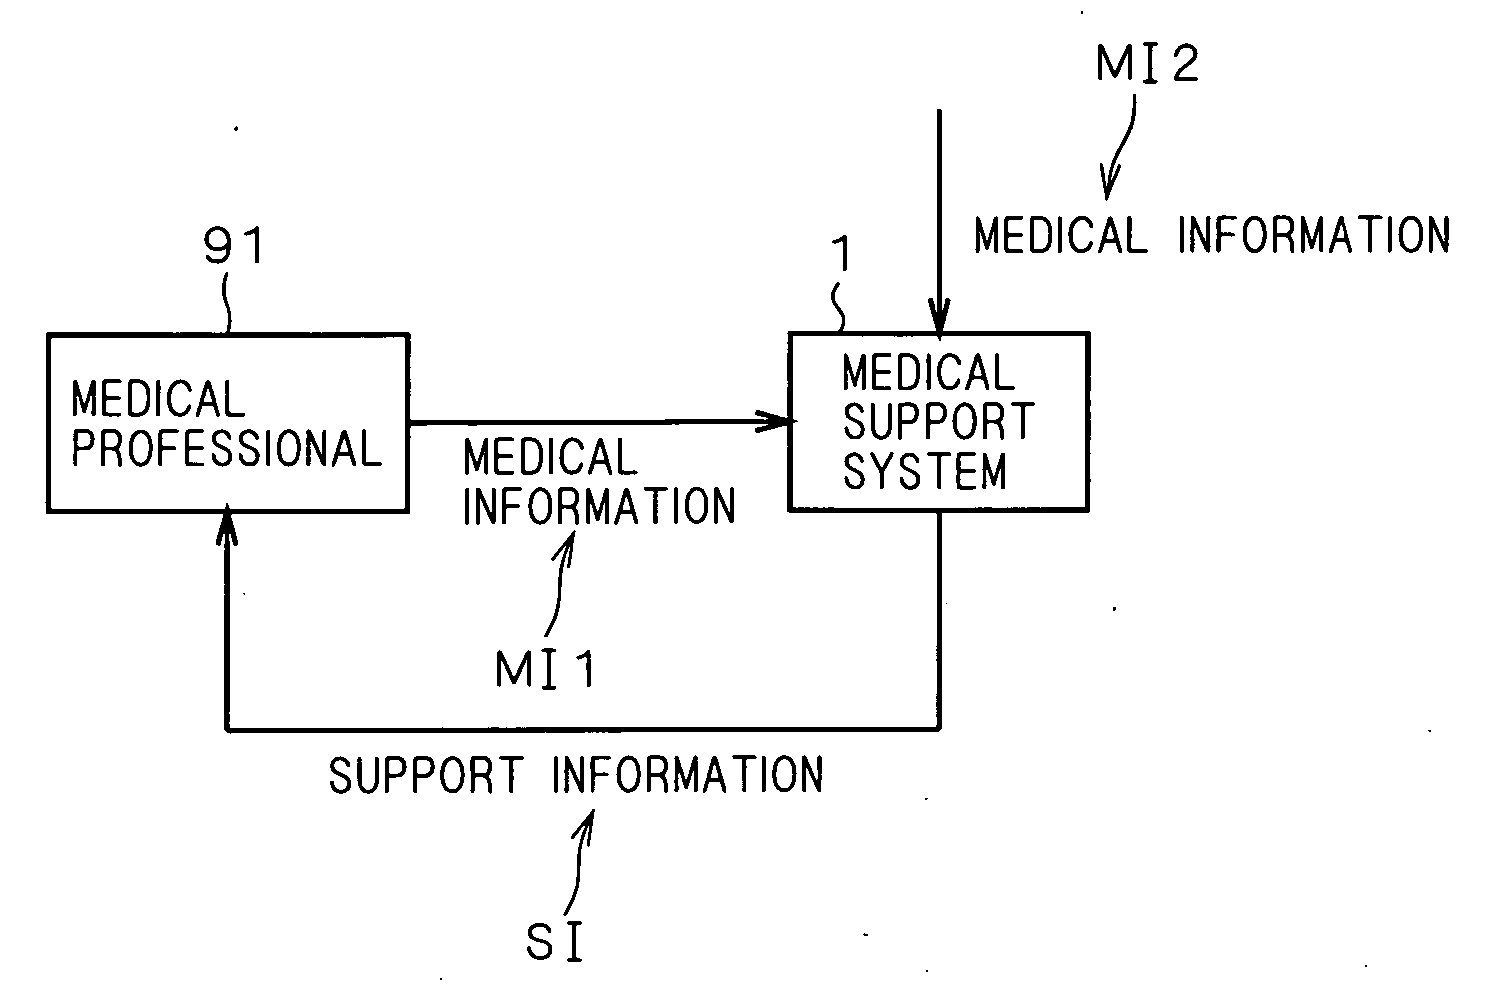 Medical support system